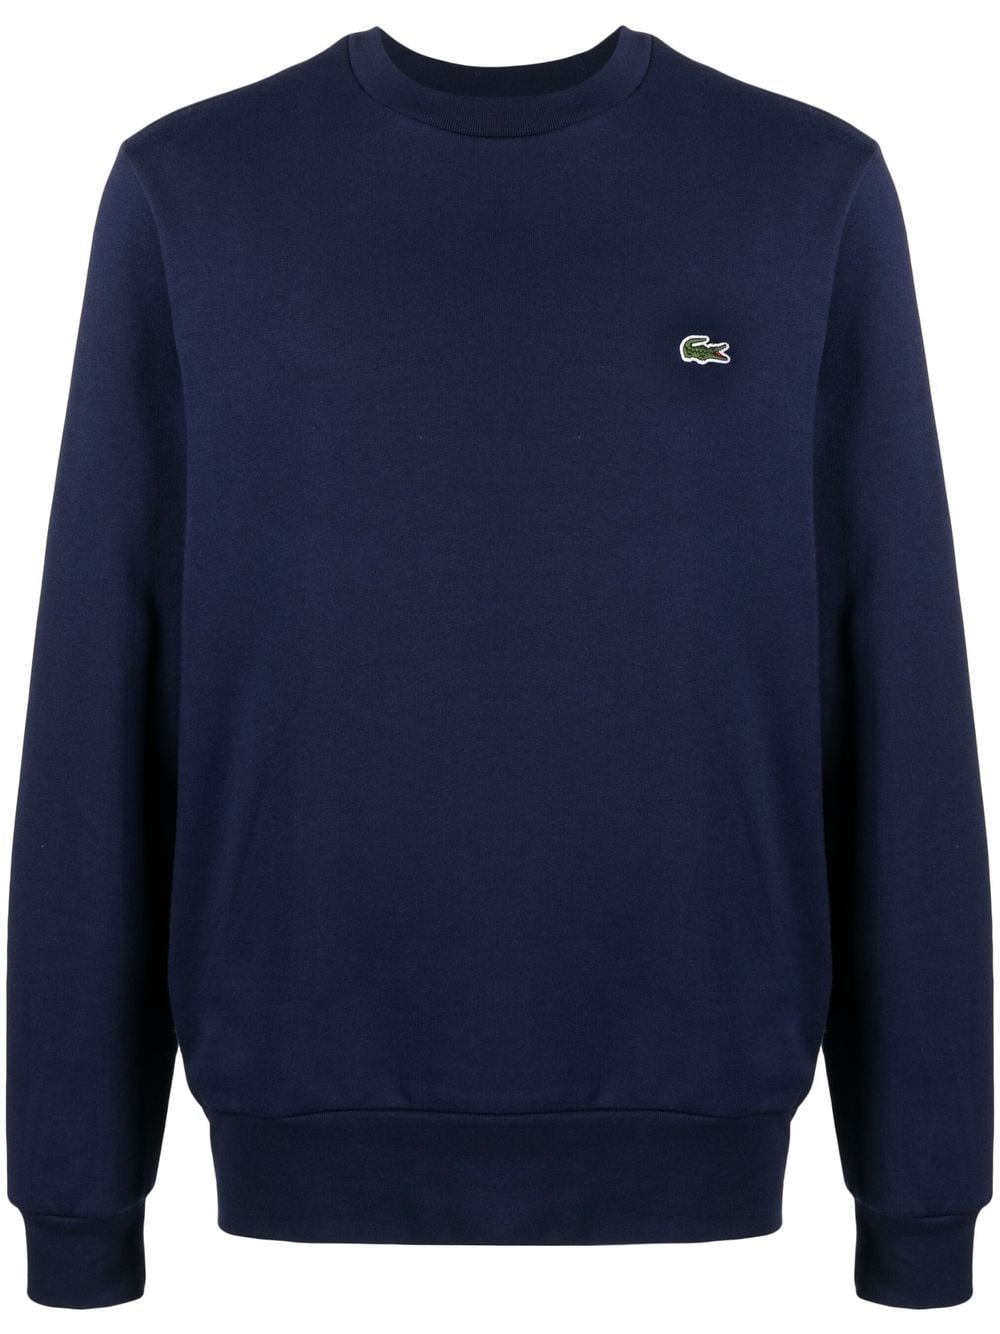 Classic logo-patch cotton sweatshirt<BR/><BR/>